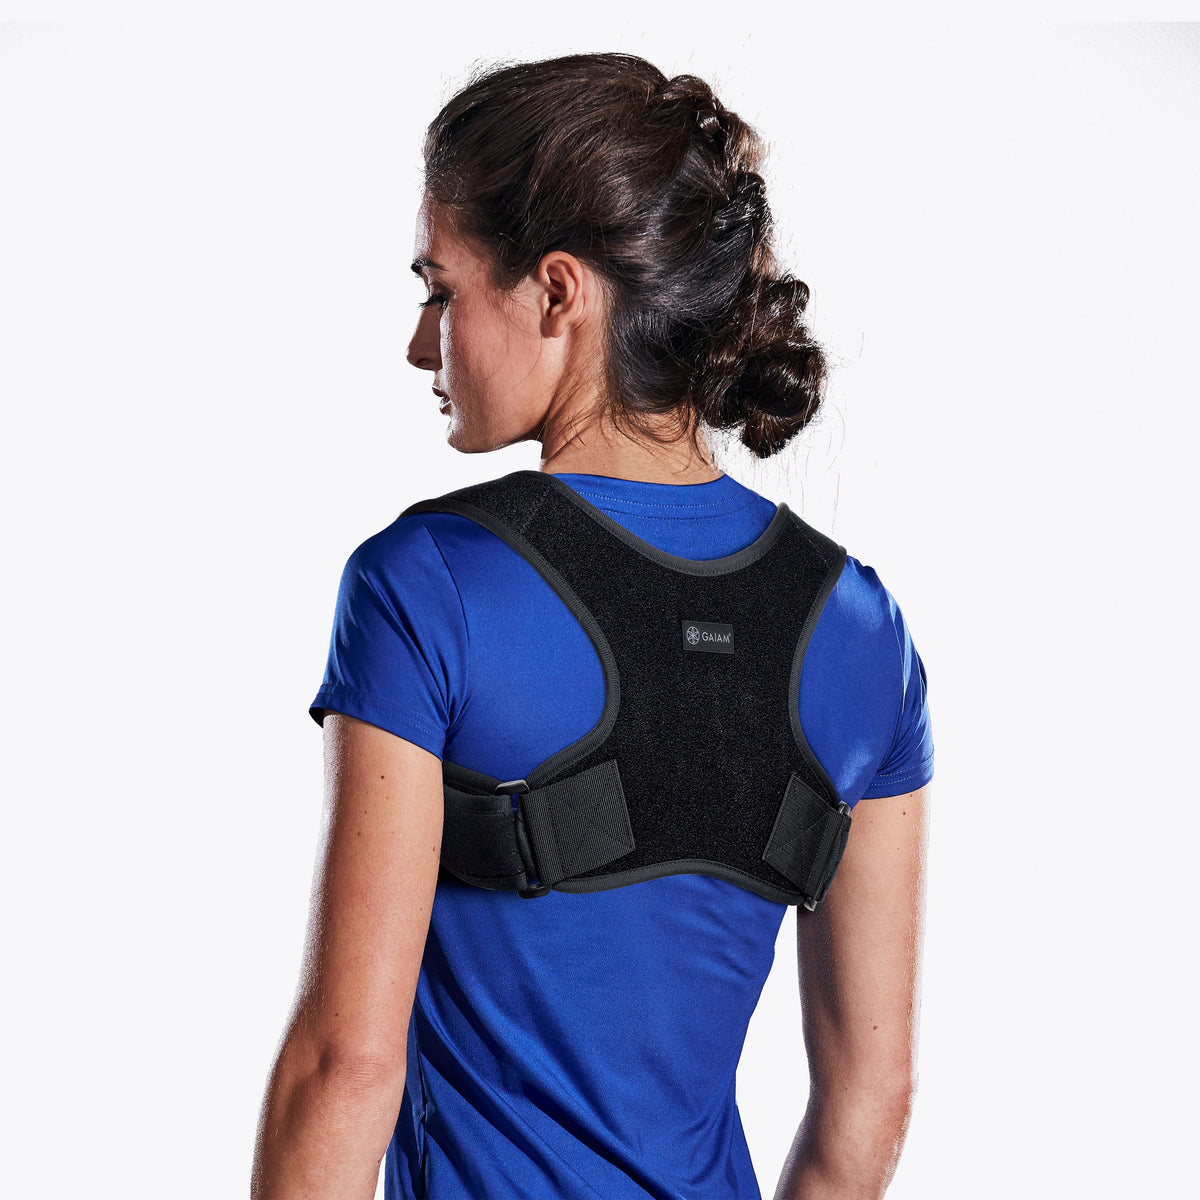 Modetro Sports Back Brace Posture Corrector – Small, Upper Back